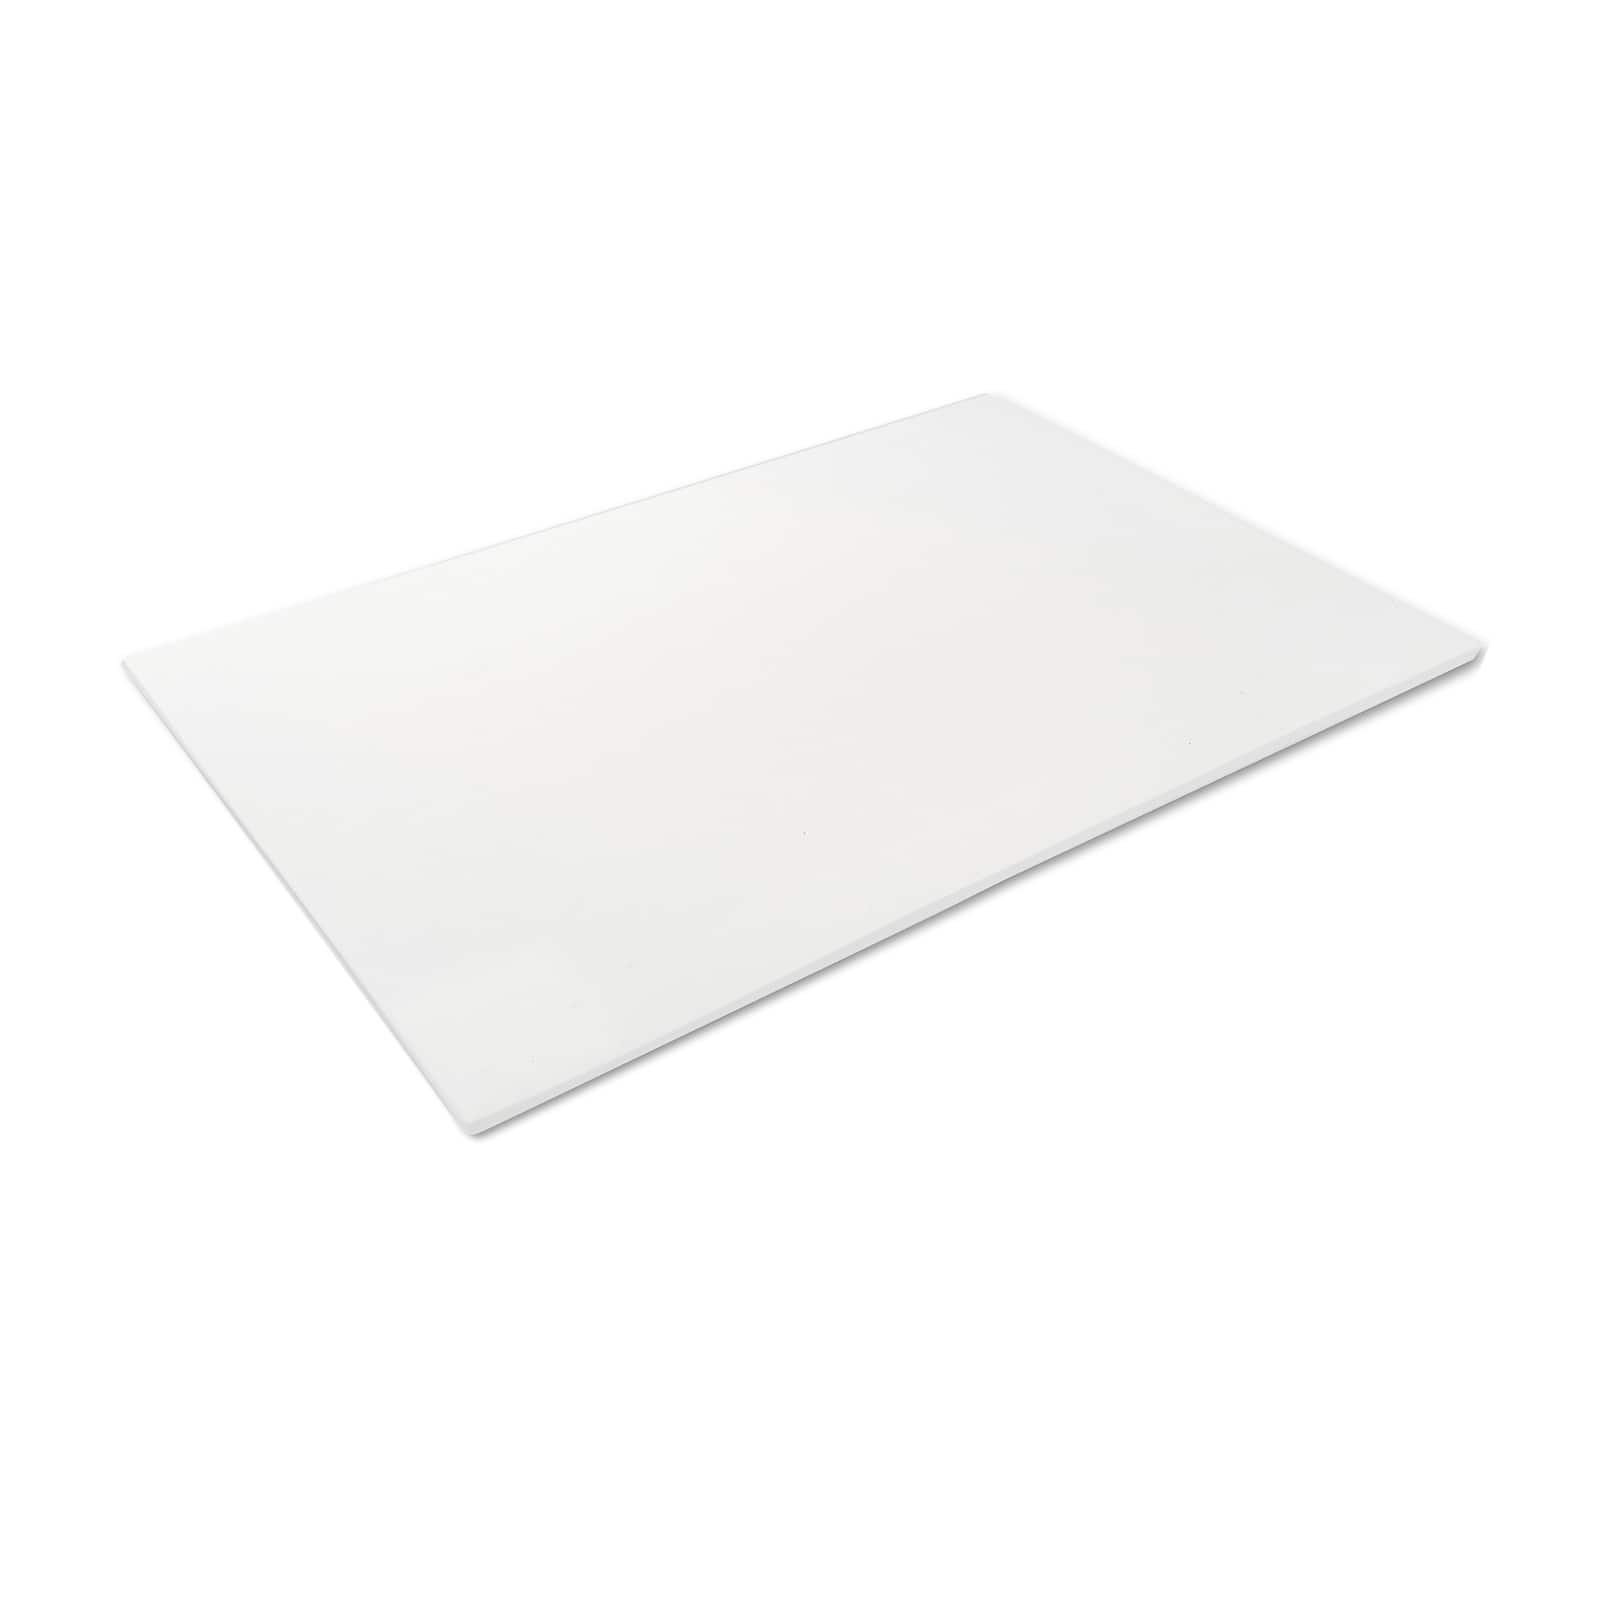 20 Pack: 9 x 12 White Thick Foam Sheet by Creatology™